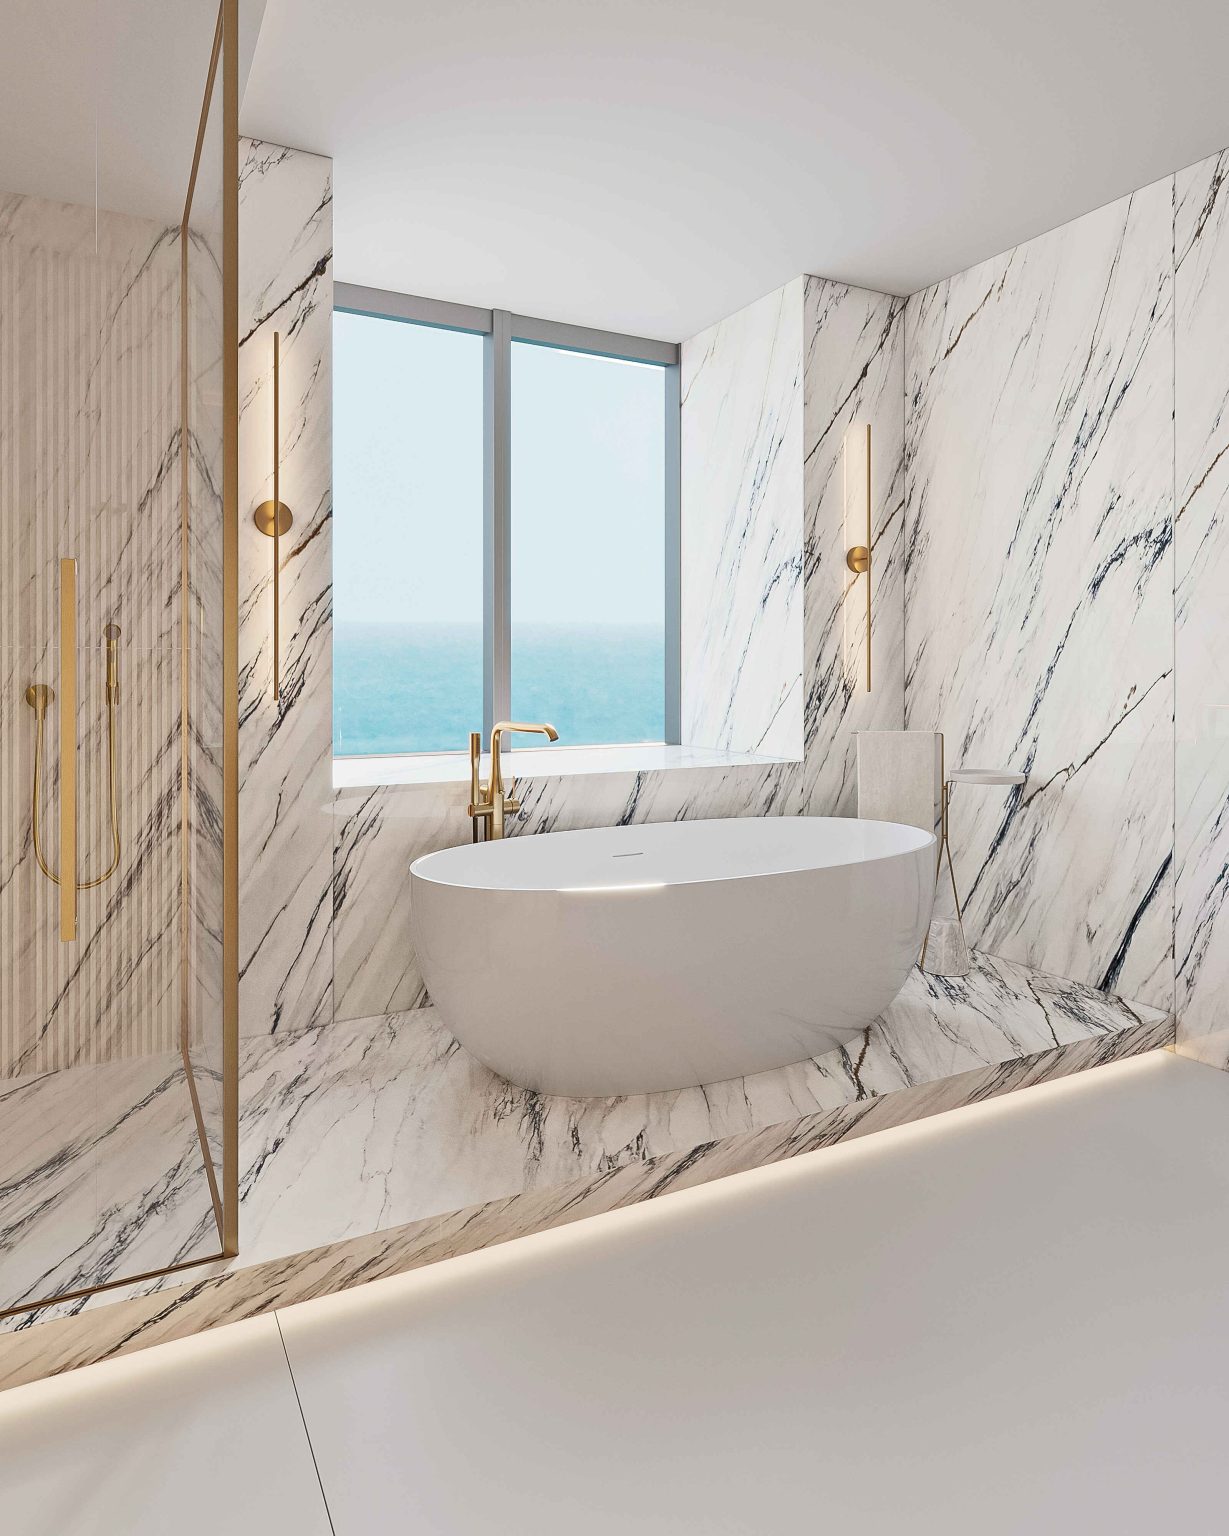 Luxurious Mediterranean Bathroom Design in Miami by Natalia Starinova